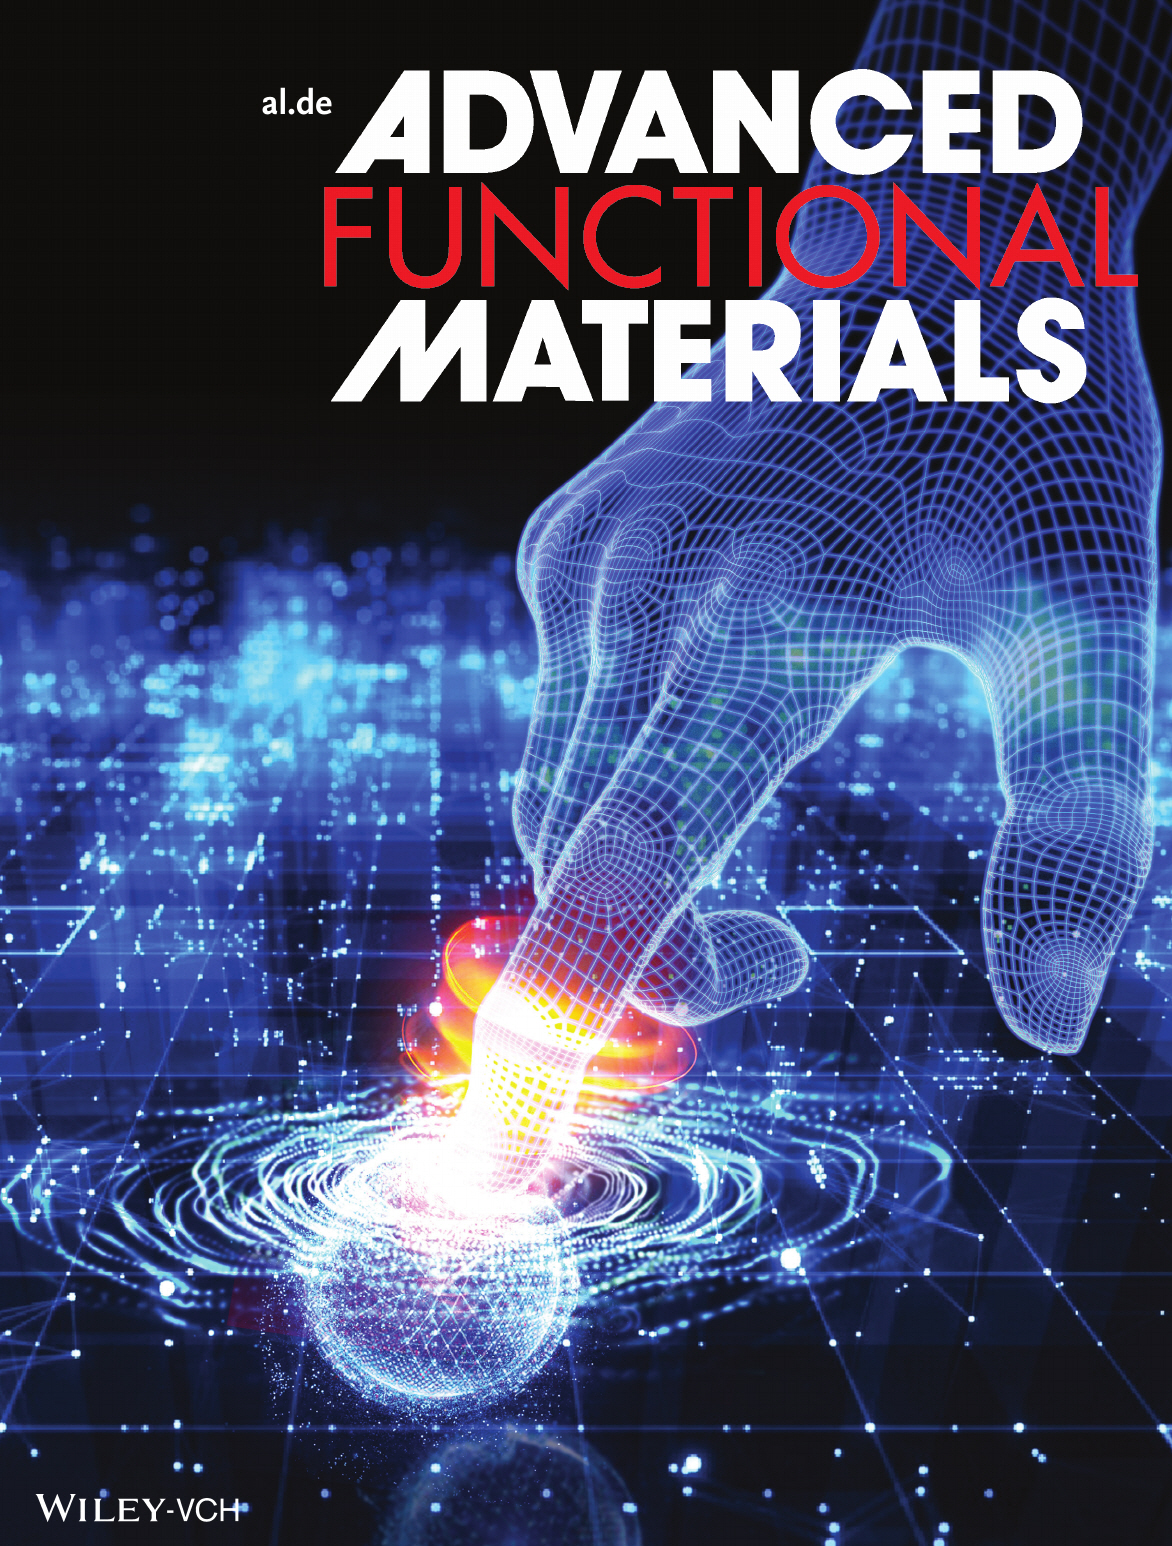 Advanced Fuctional Materials 가상현실 특별호 표지논문 선정